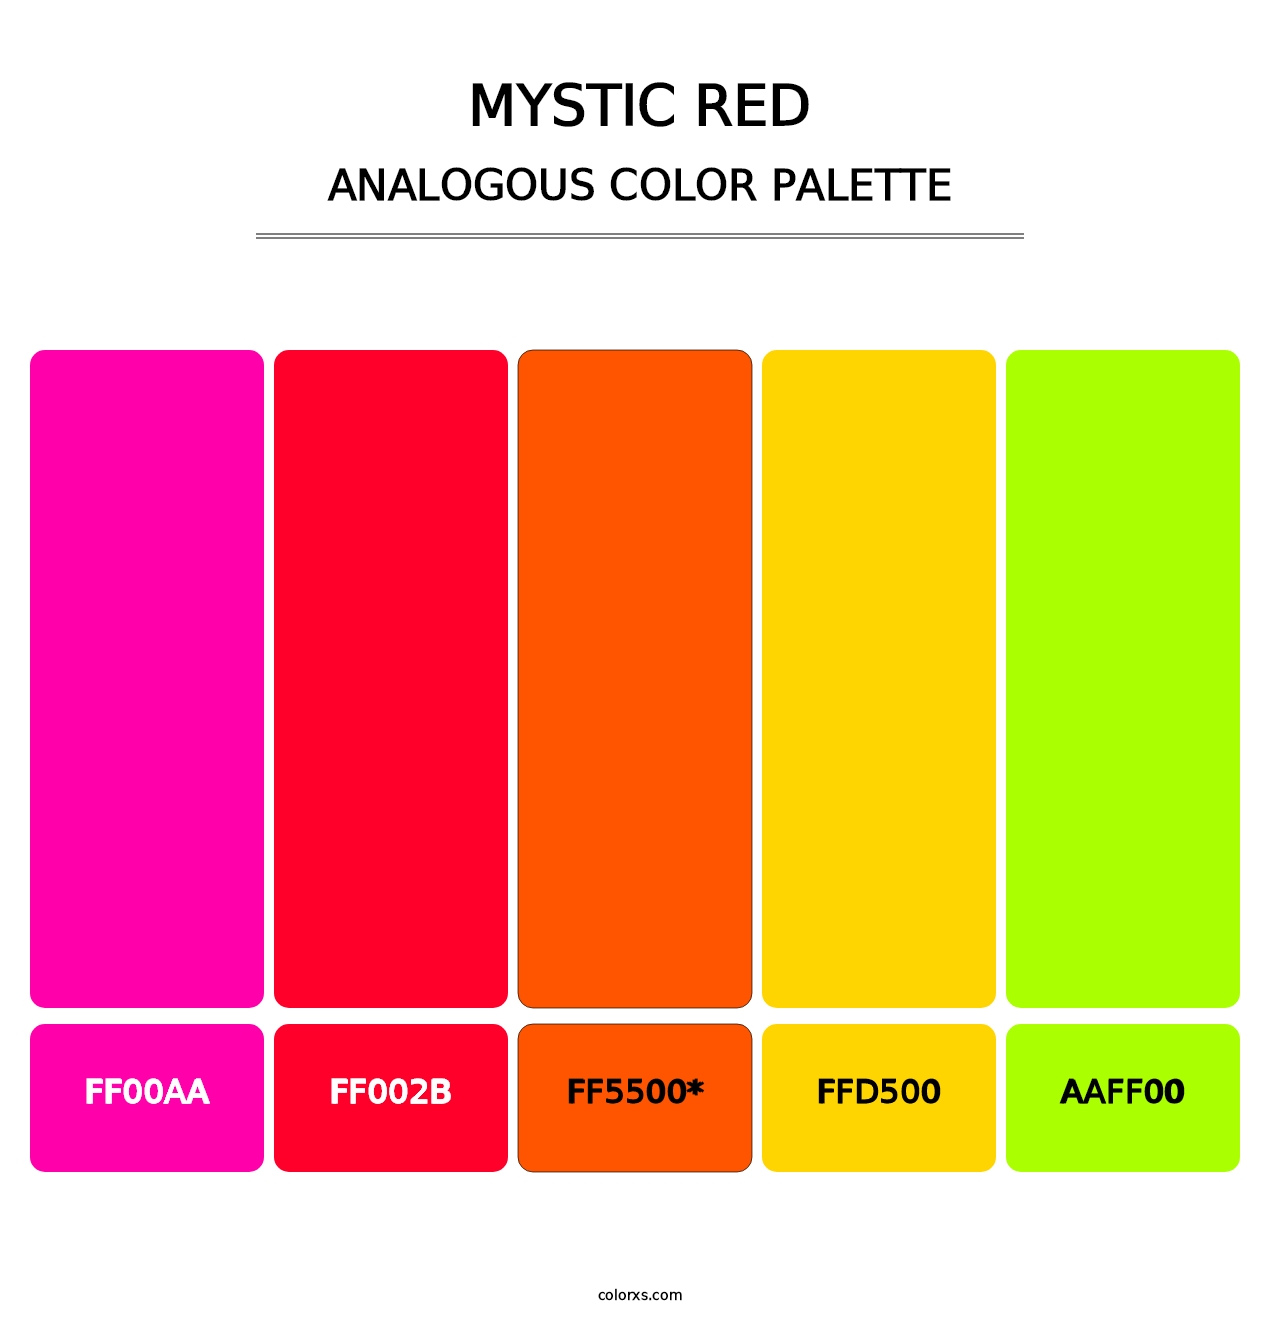 Mystic Red - Analogous Color Palette